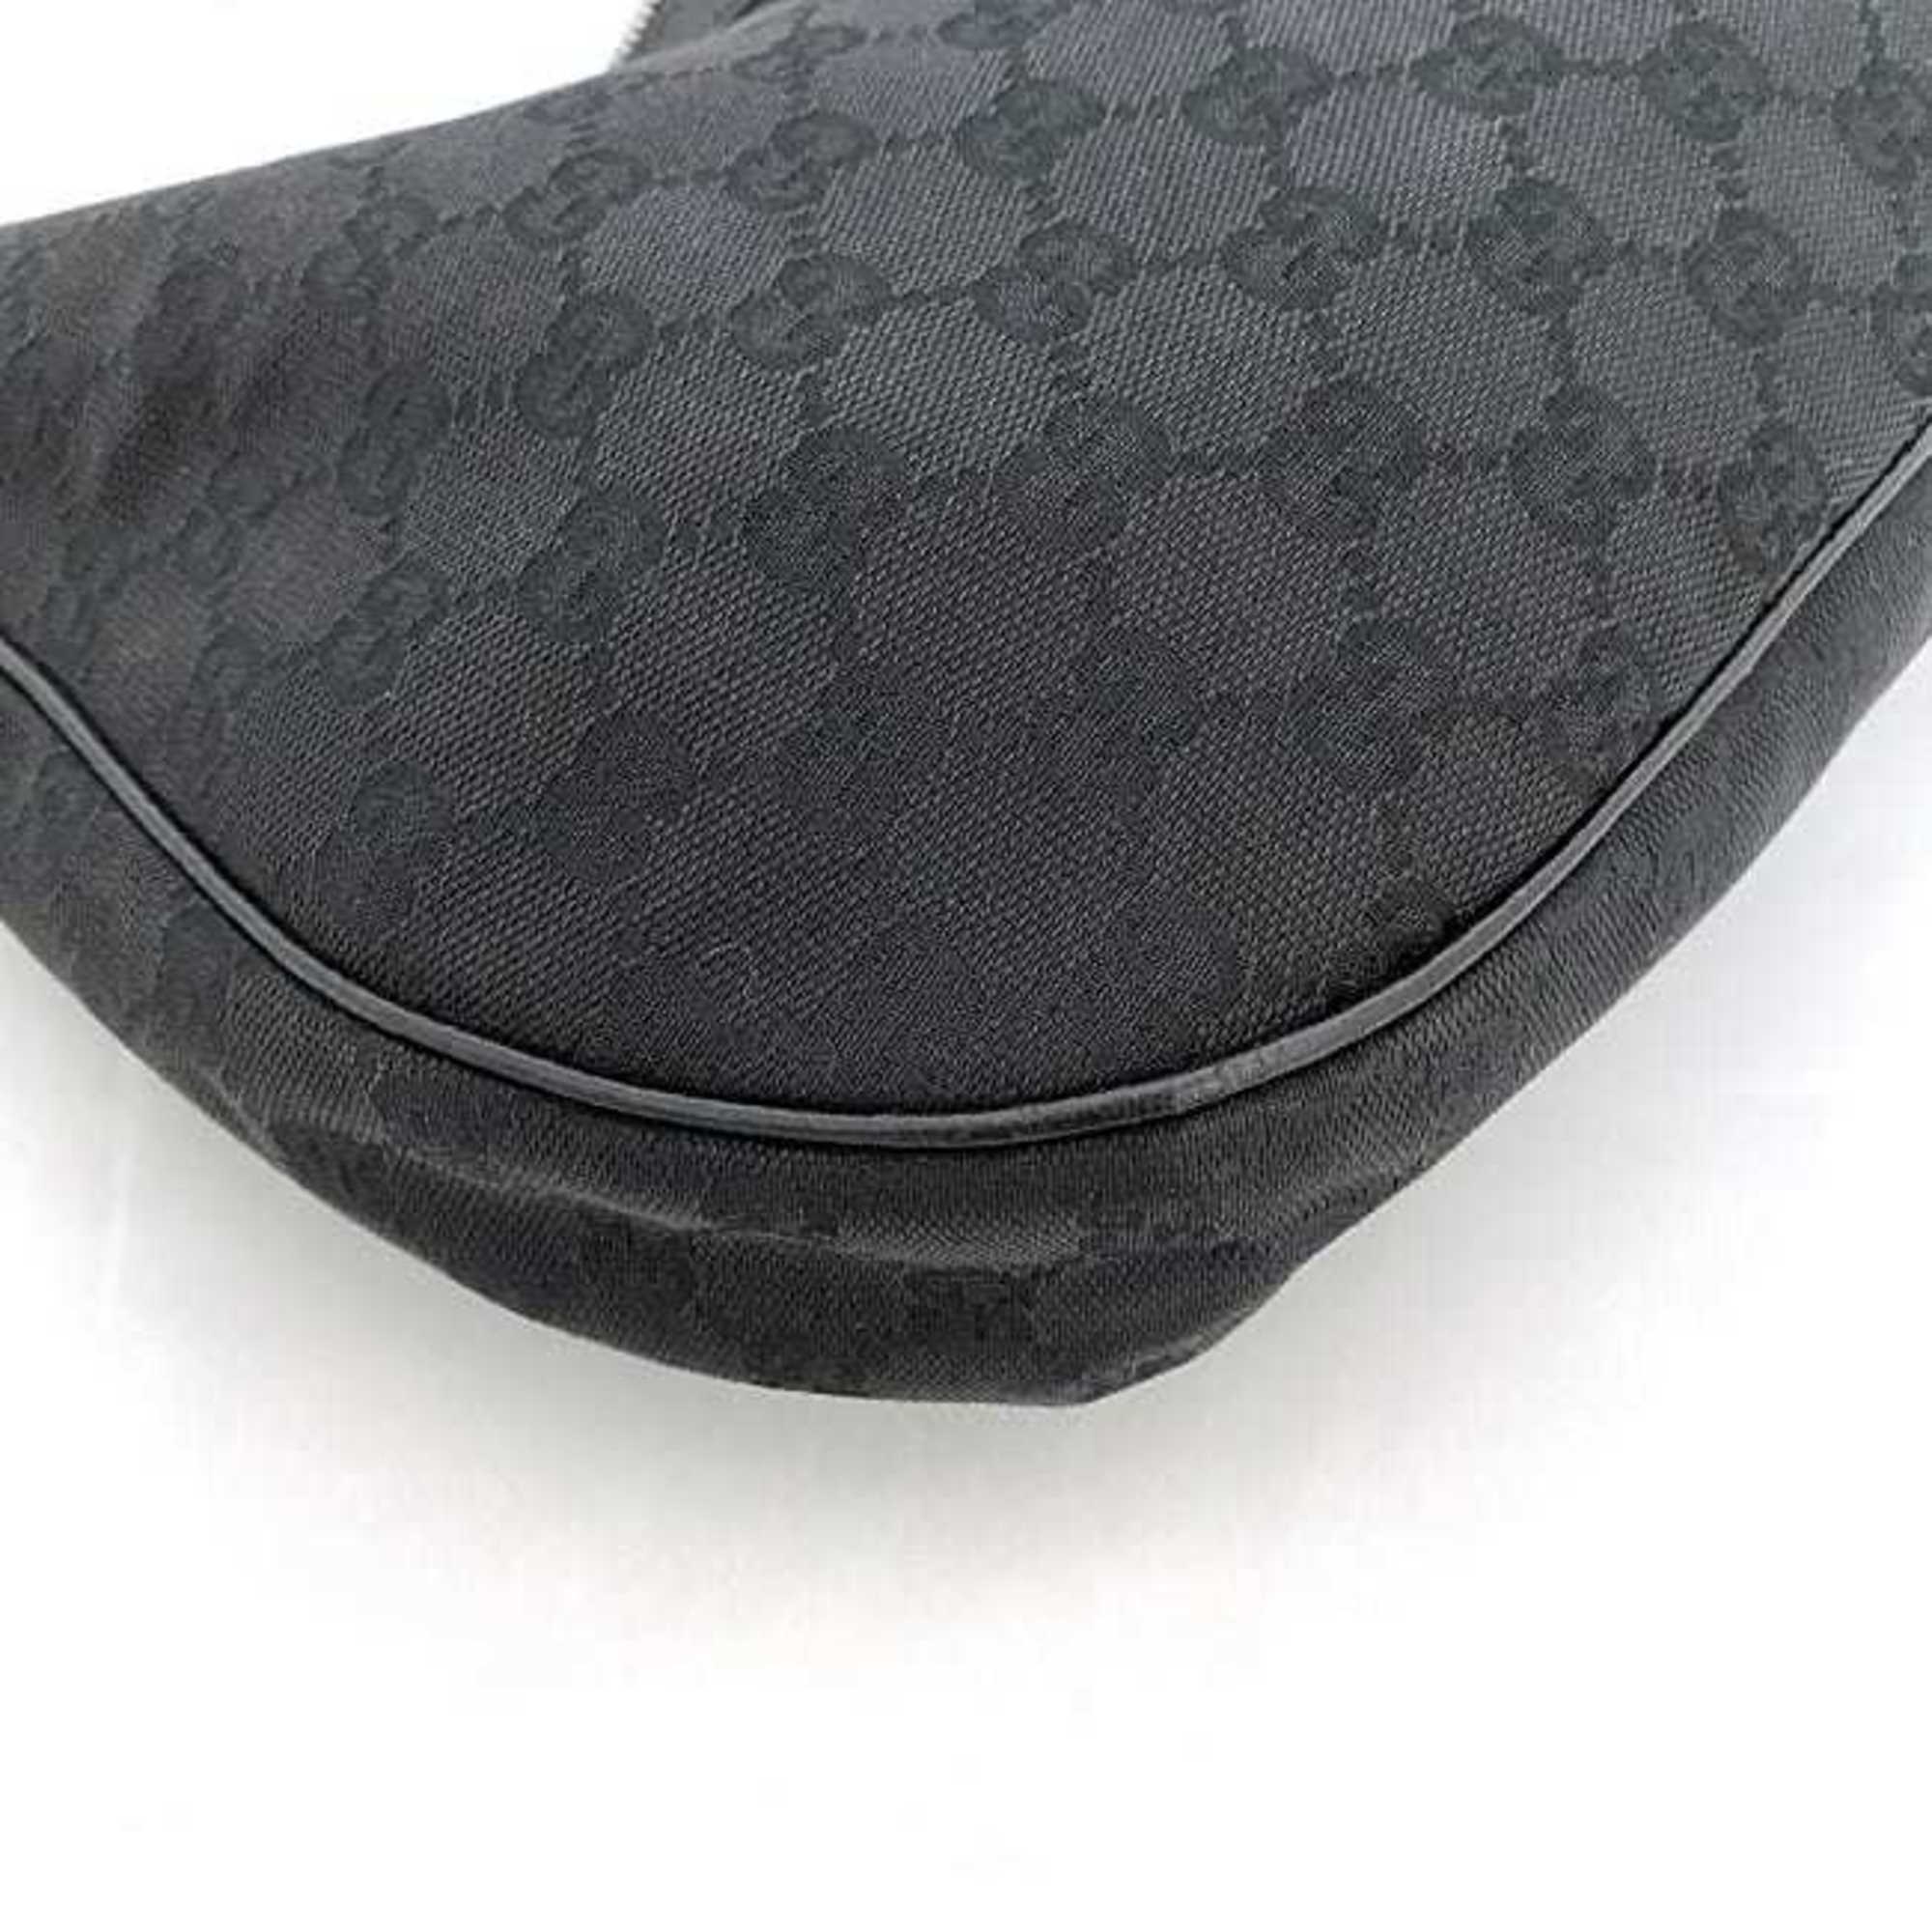 Gucci Shoulder Bag Black 122790 f-20295 Canvas Leather GUCCI GG Half-moon Shape Women's Crossbody